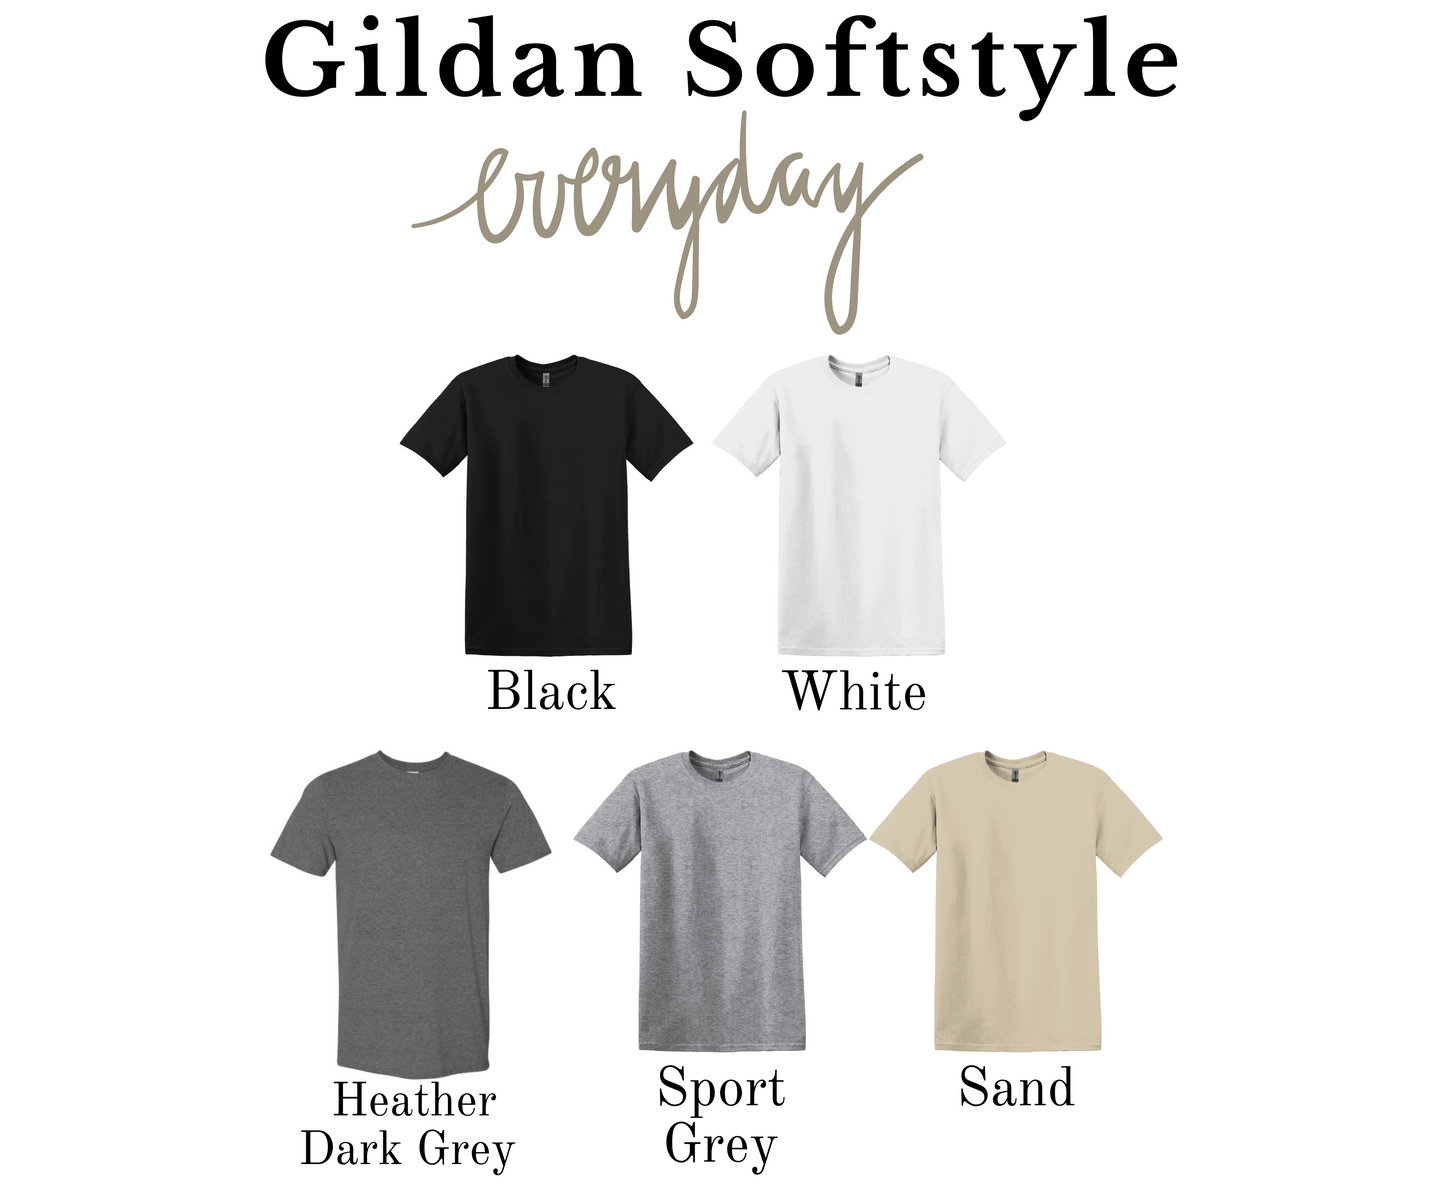 Teacher Shamrock Gildan Softstyle Tshirt or Sweatshirt